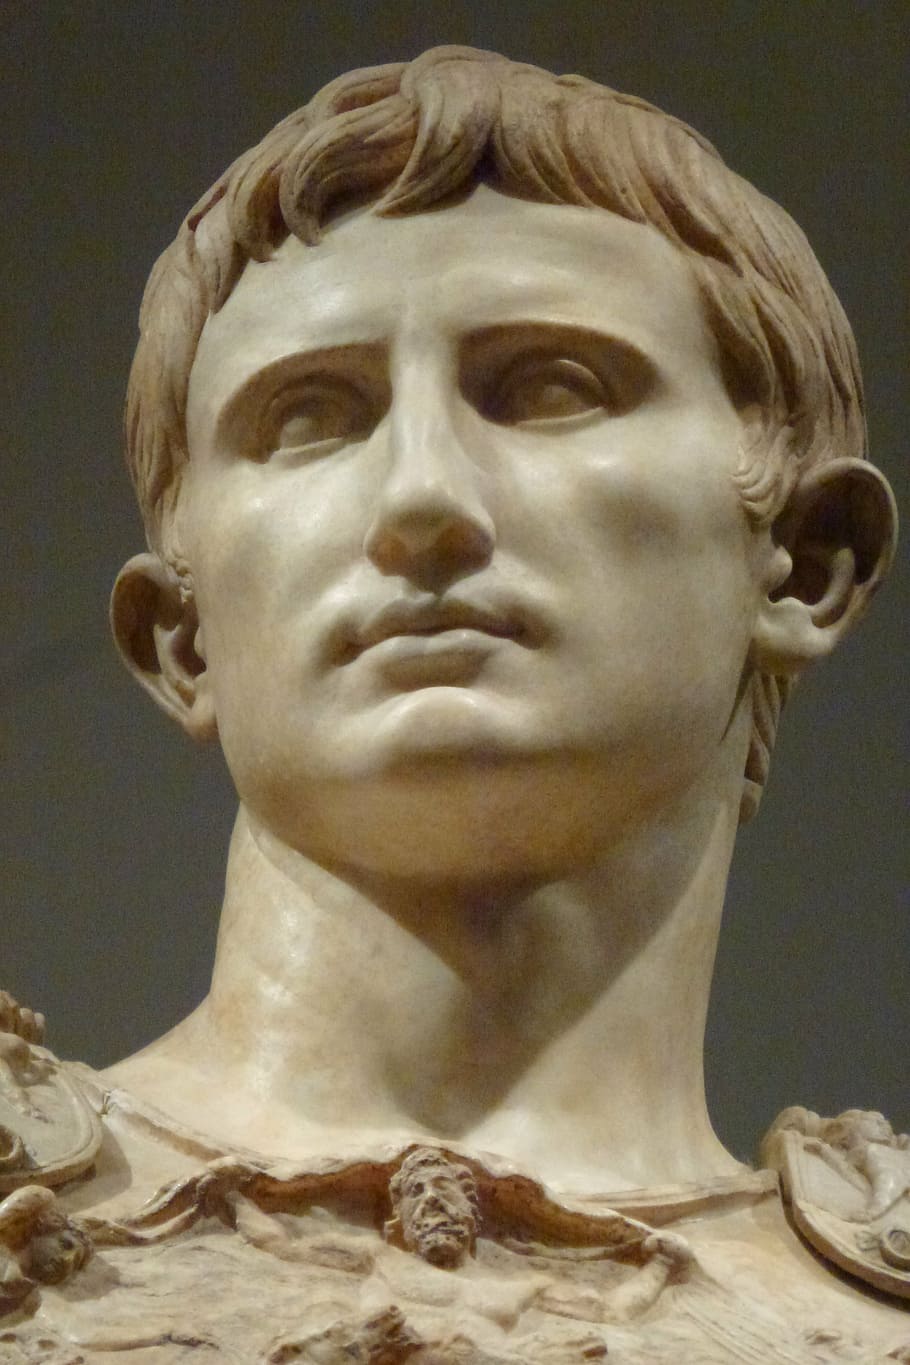 auguste, emperor, antique, statue, human representation, sculpture, art and craft, representation, male likeness, close-up